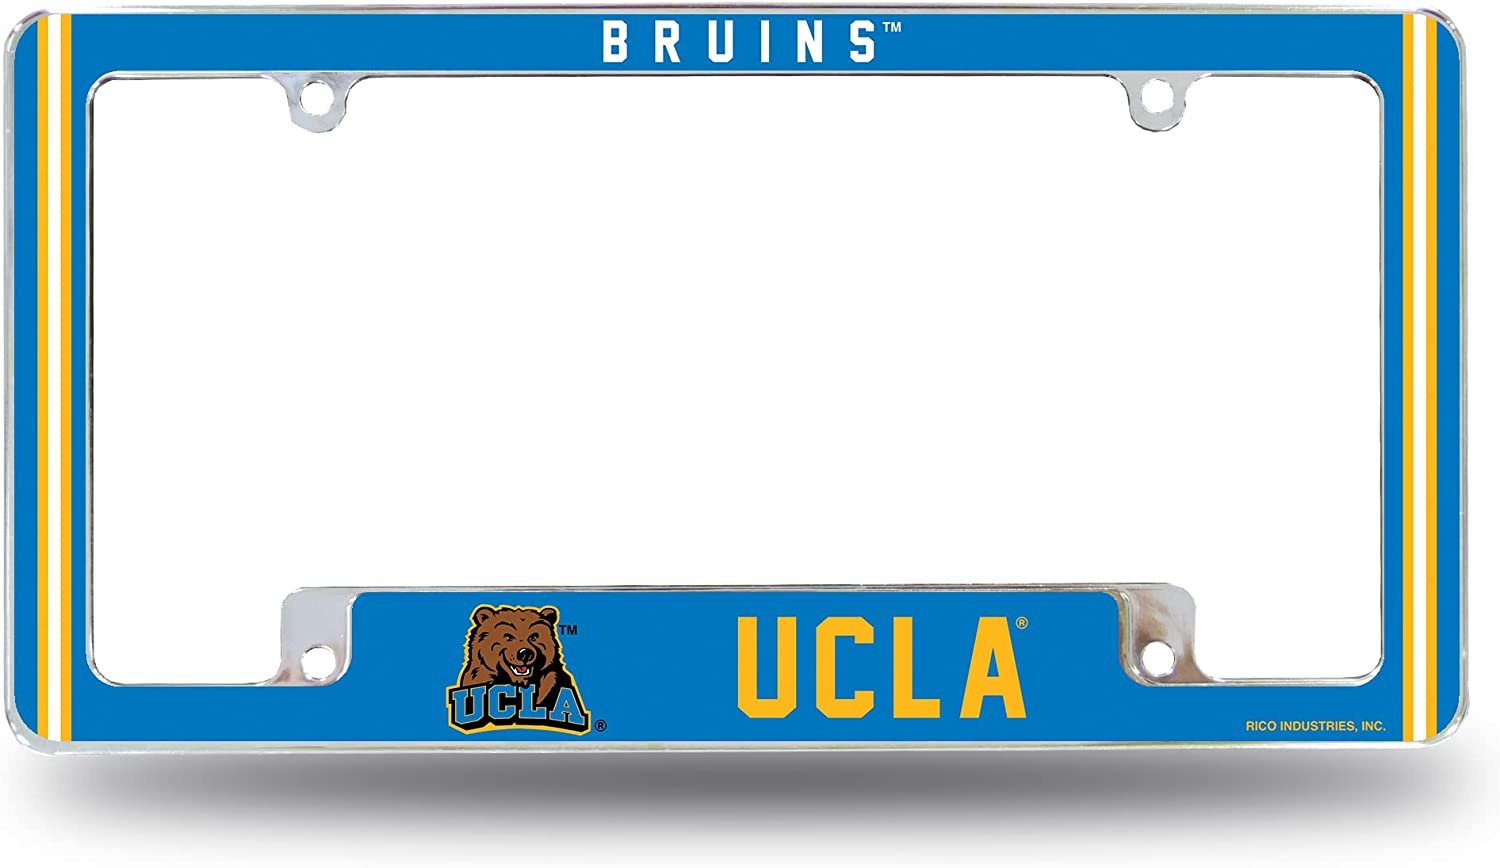 University of California Los Angeles Bruins UCLA Metal License Plate Frame Chrome Tag Cover Alternate Design 6x12 Inch